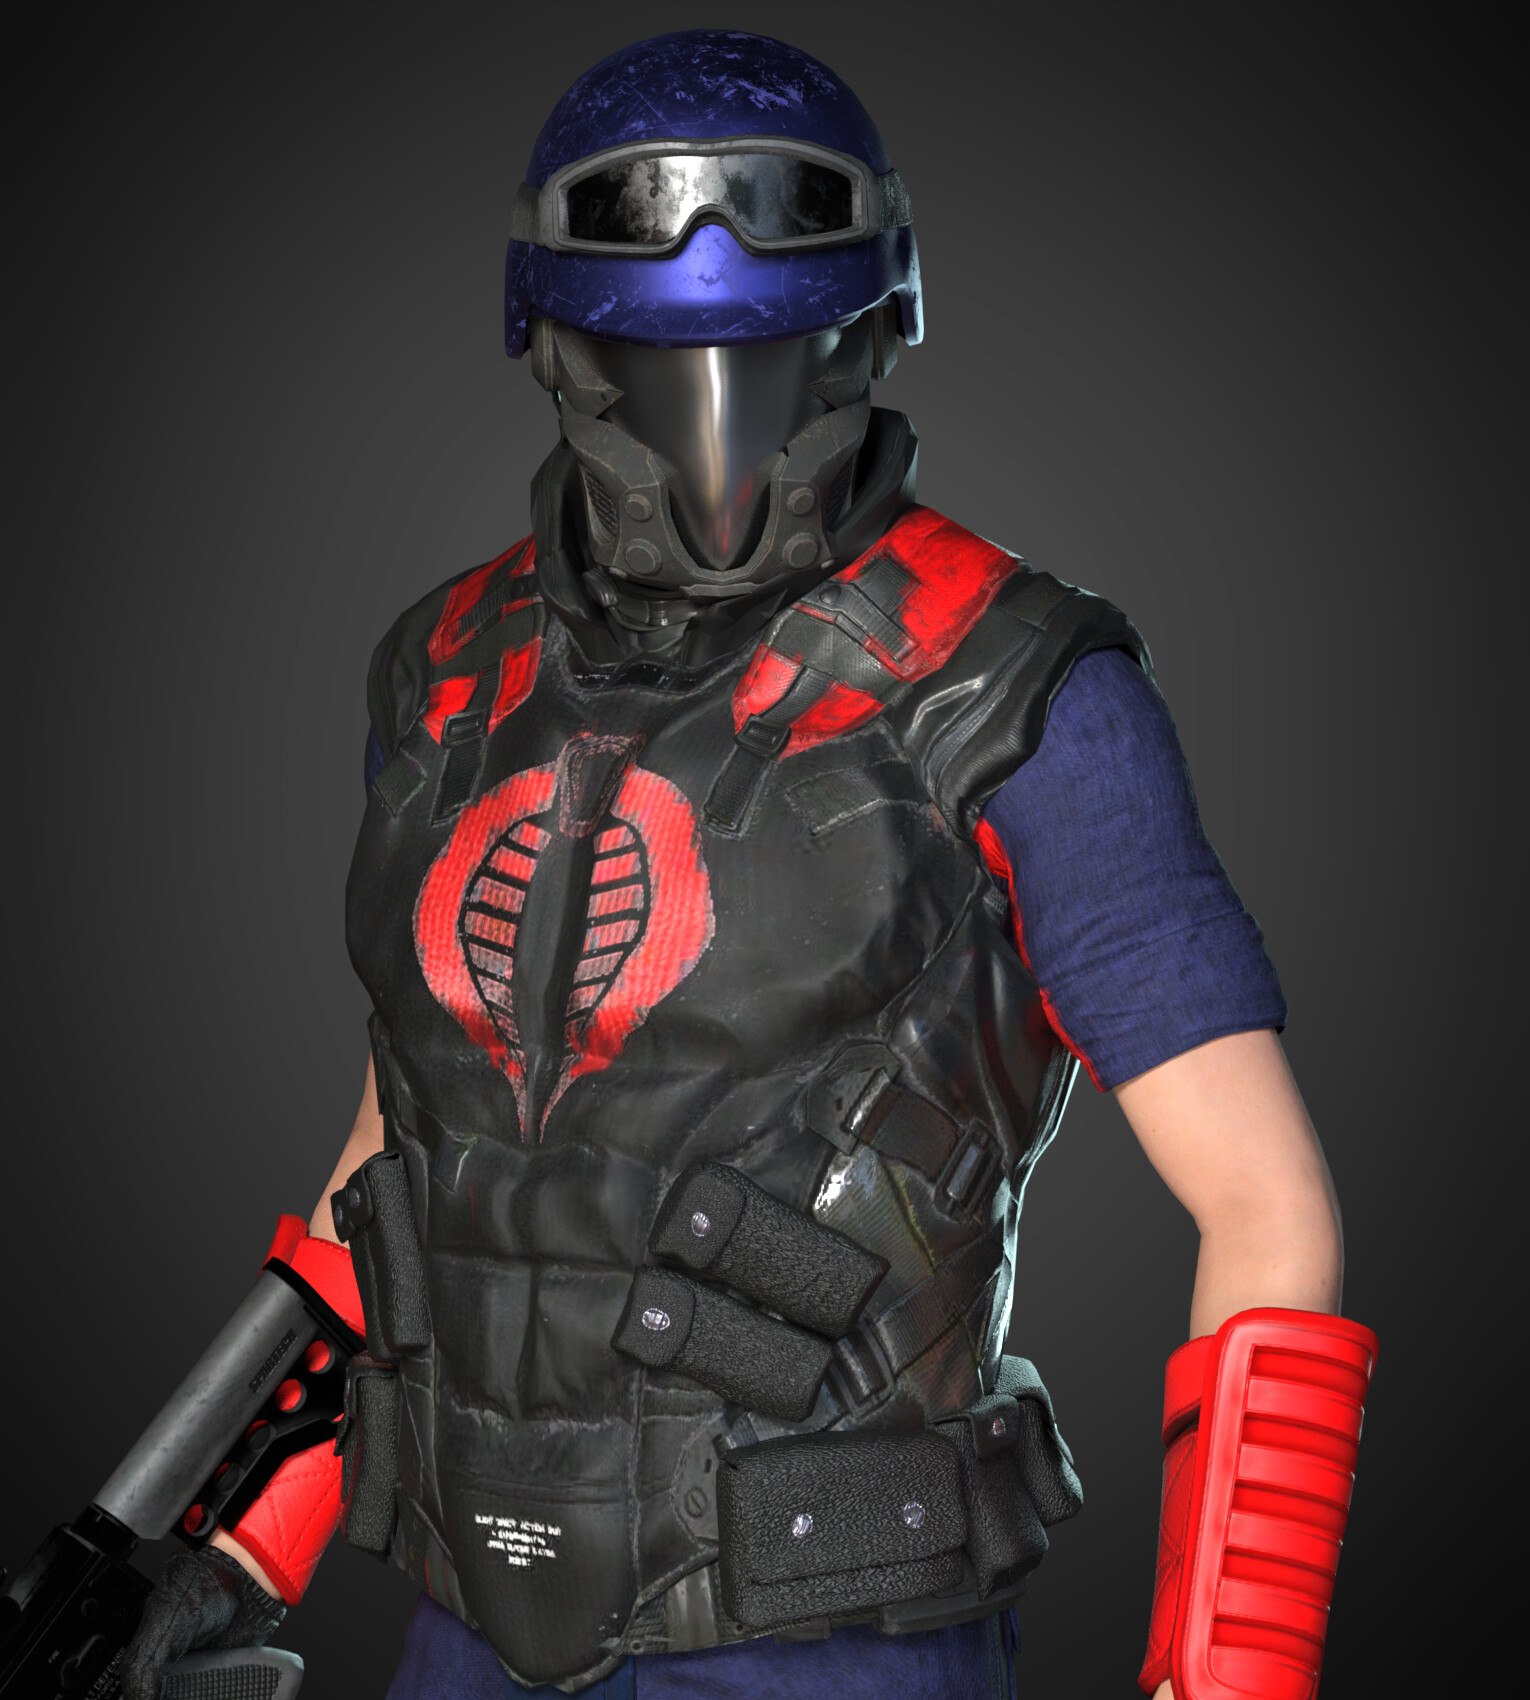 Cobra trooper costume